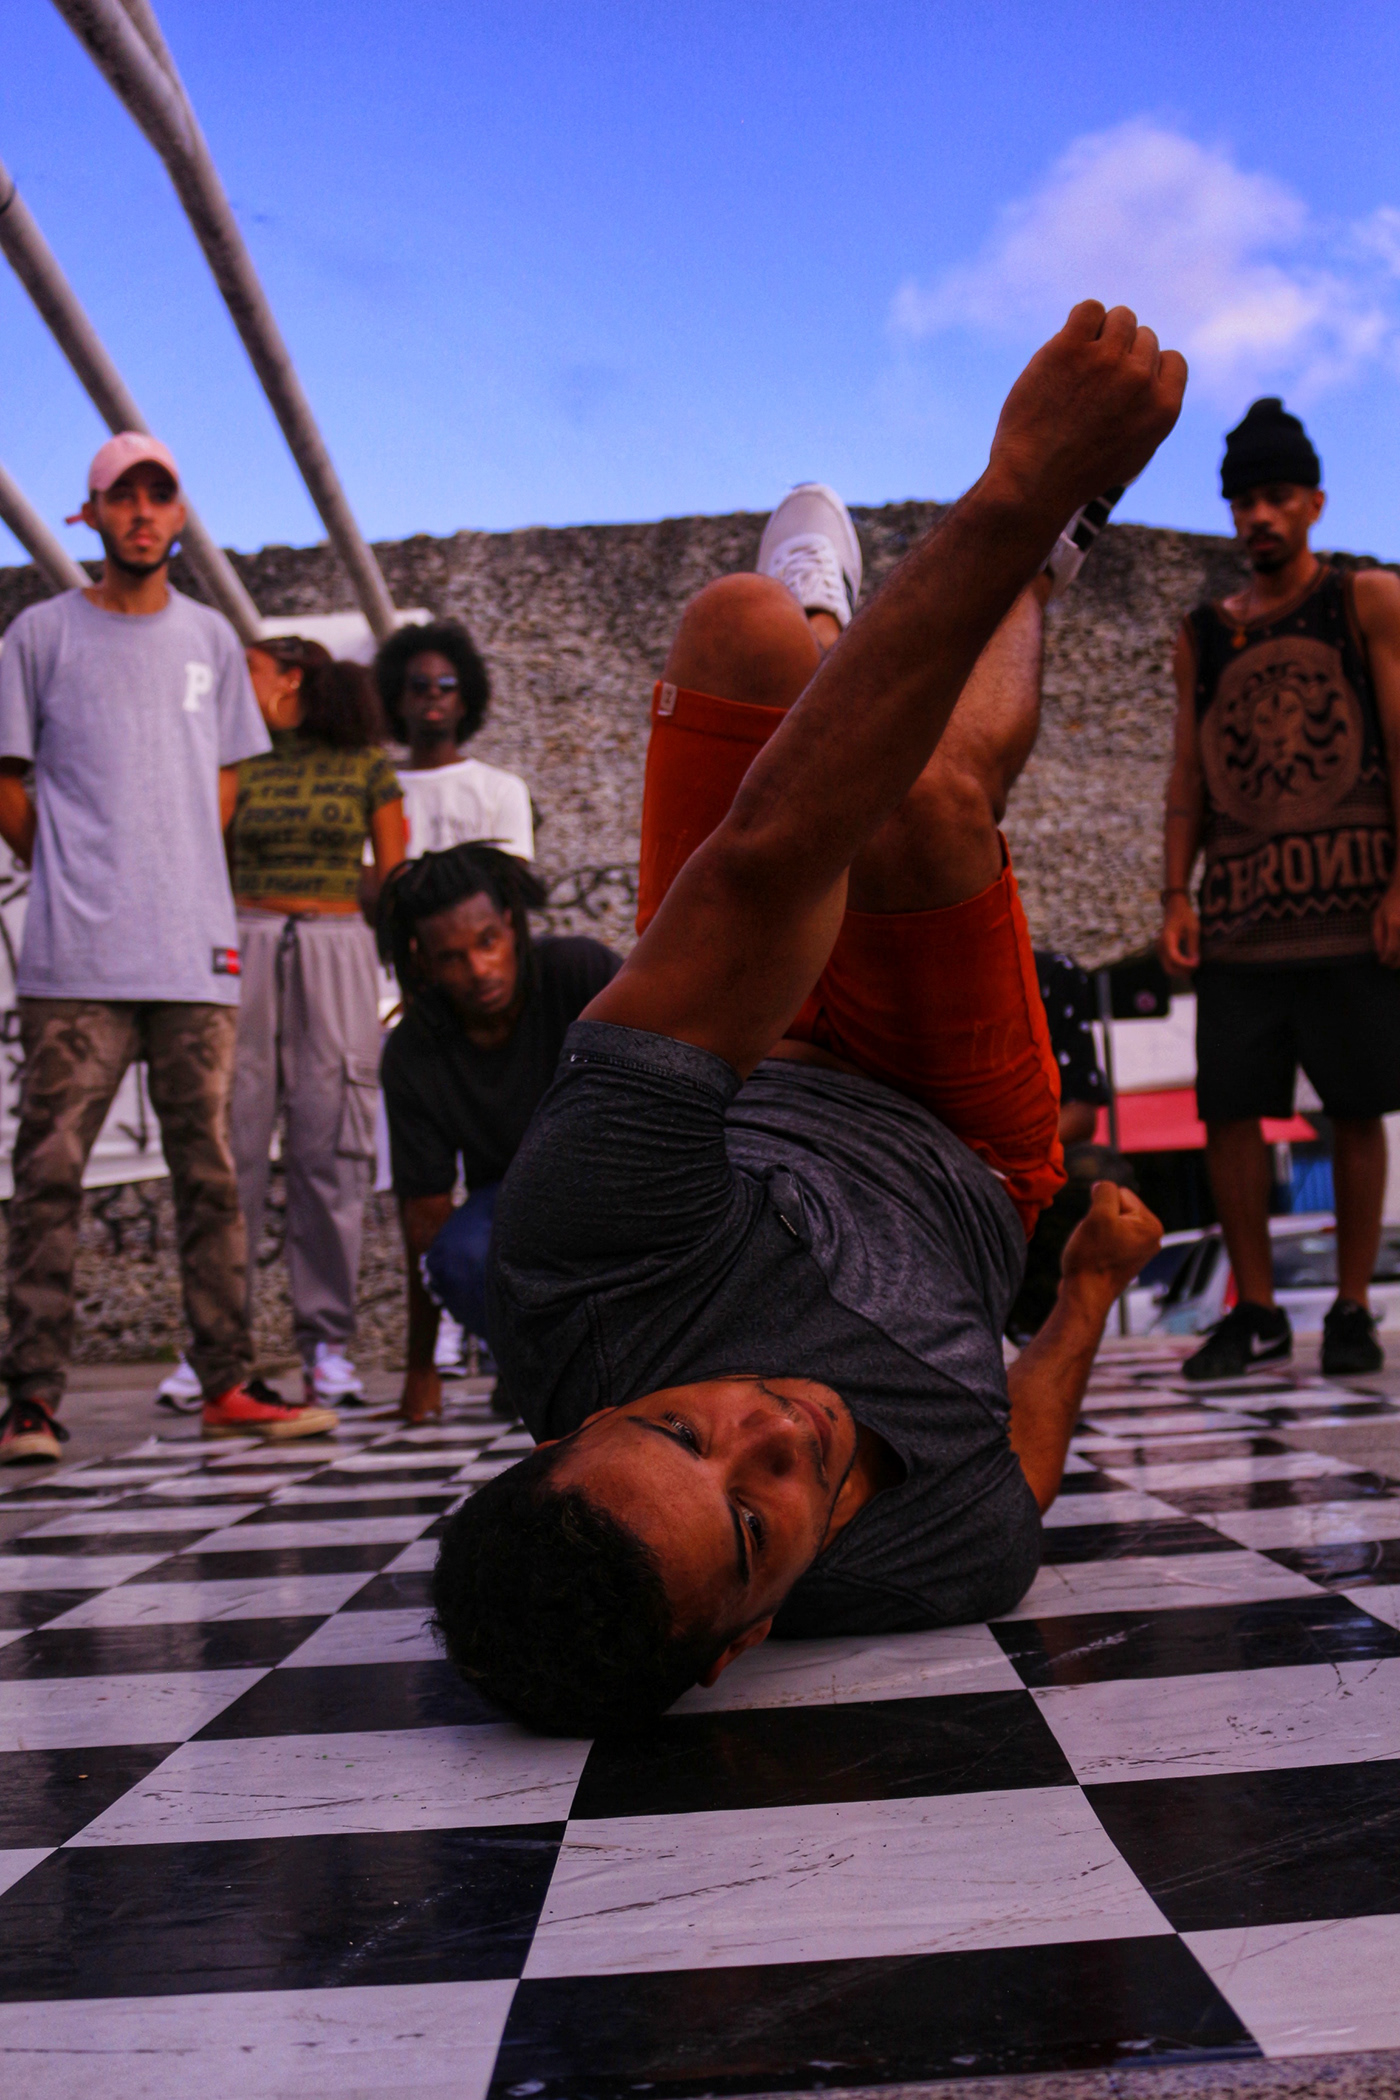 Evento hip hop Fotografia de Rua Salvador Bahia Canon Photography  BATALHA DE RIMA rap